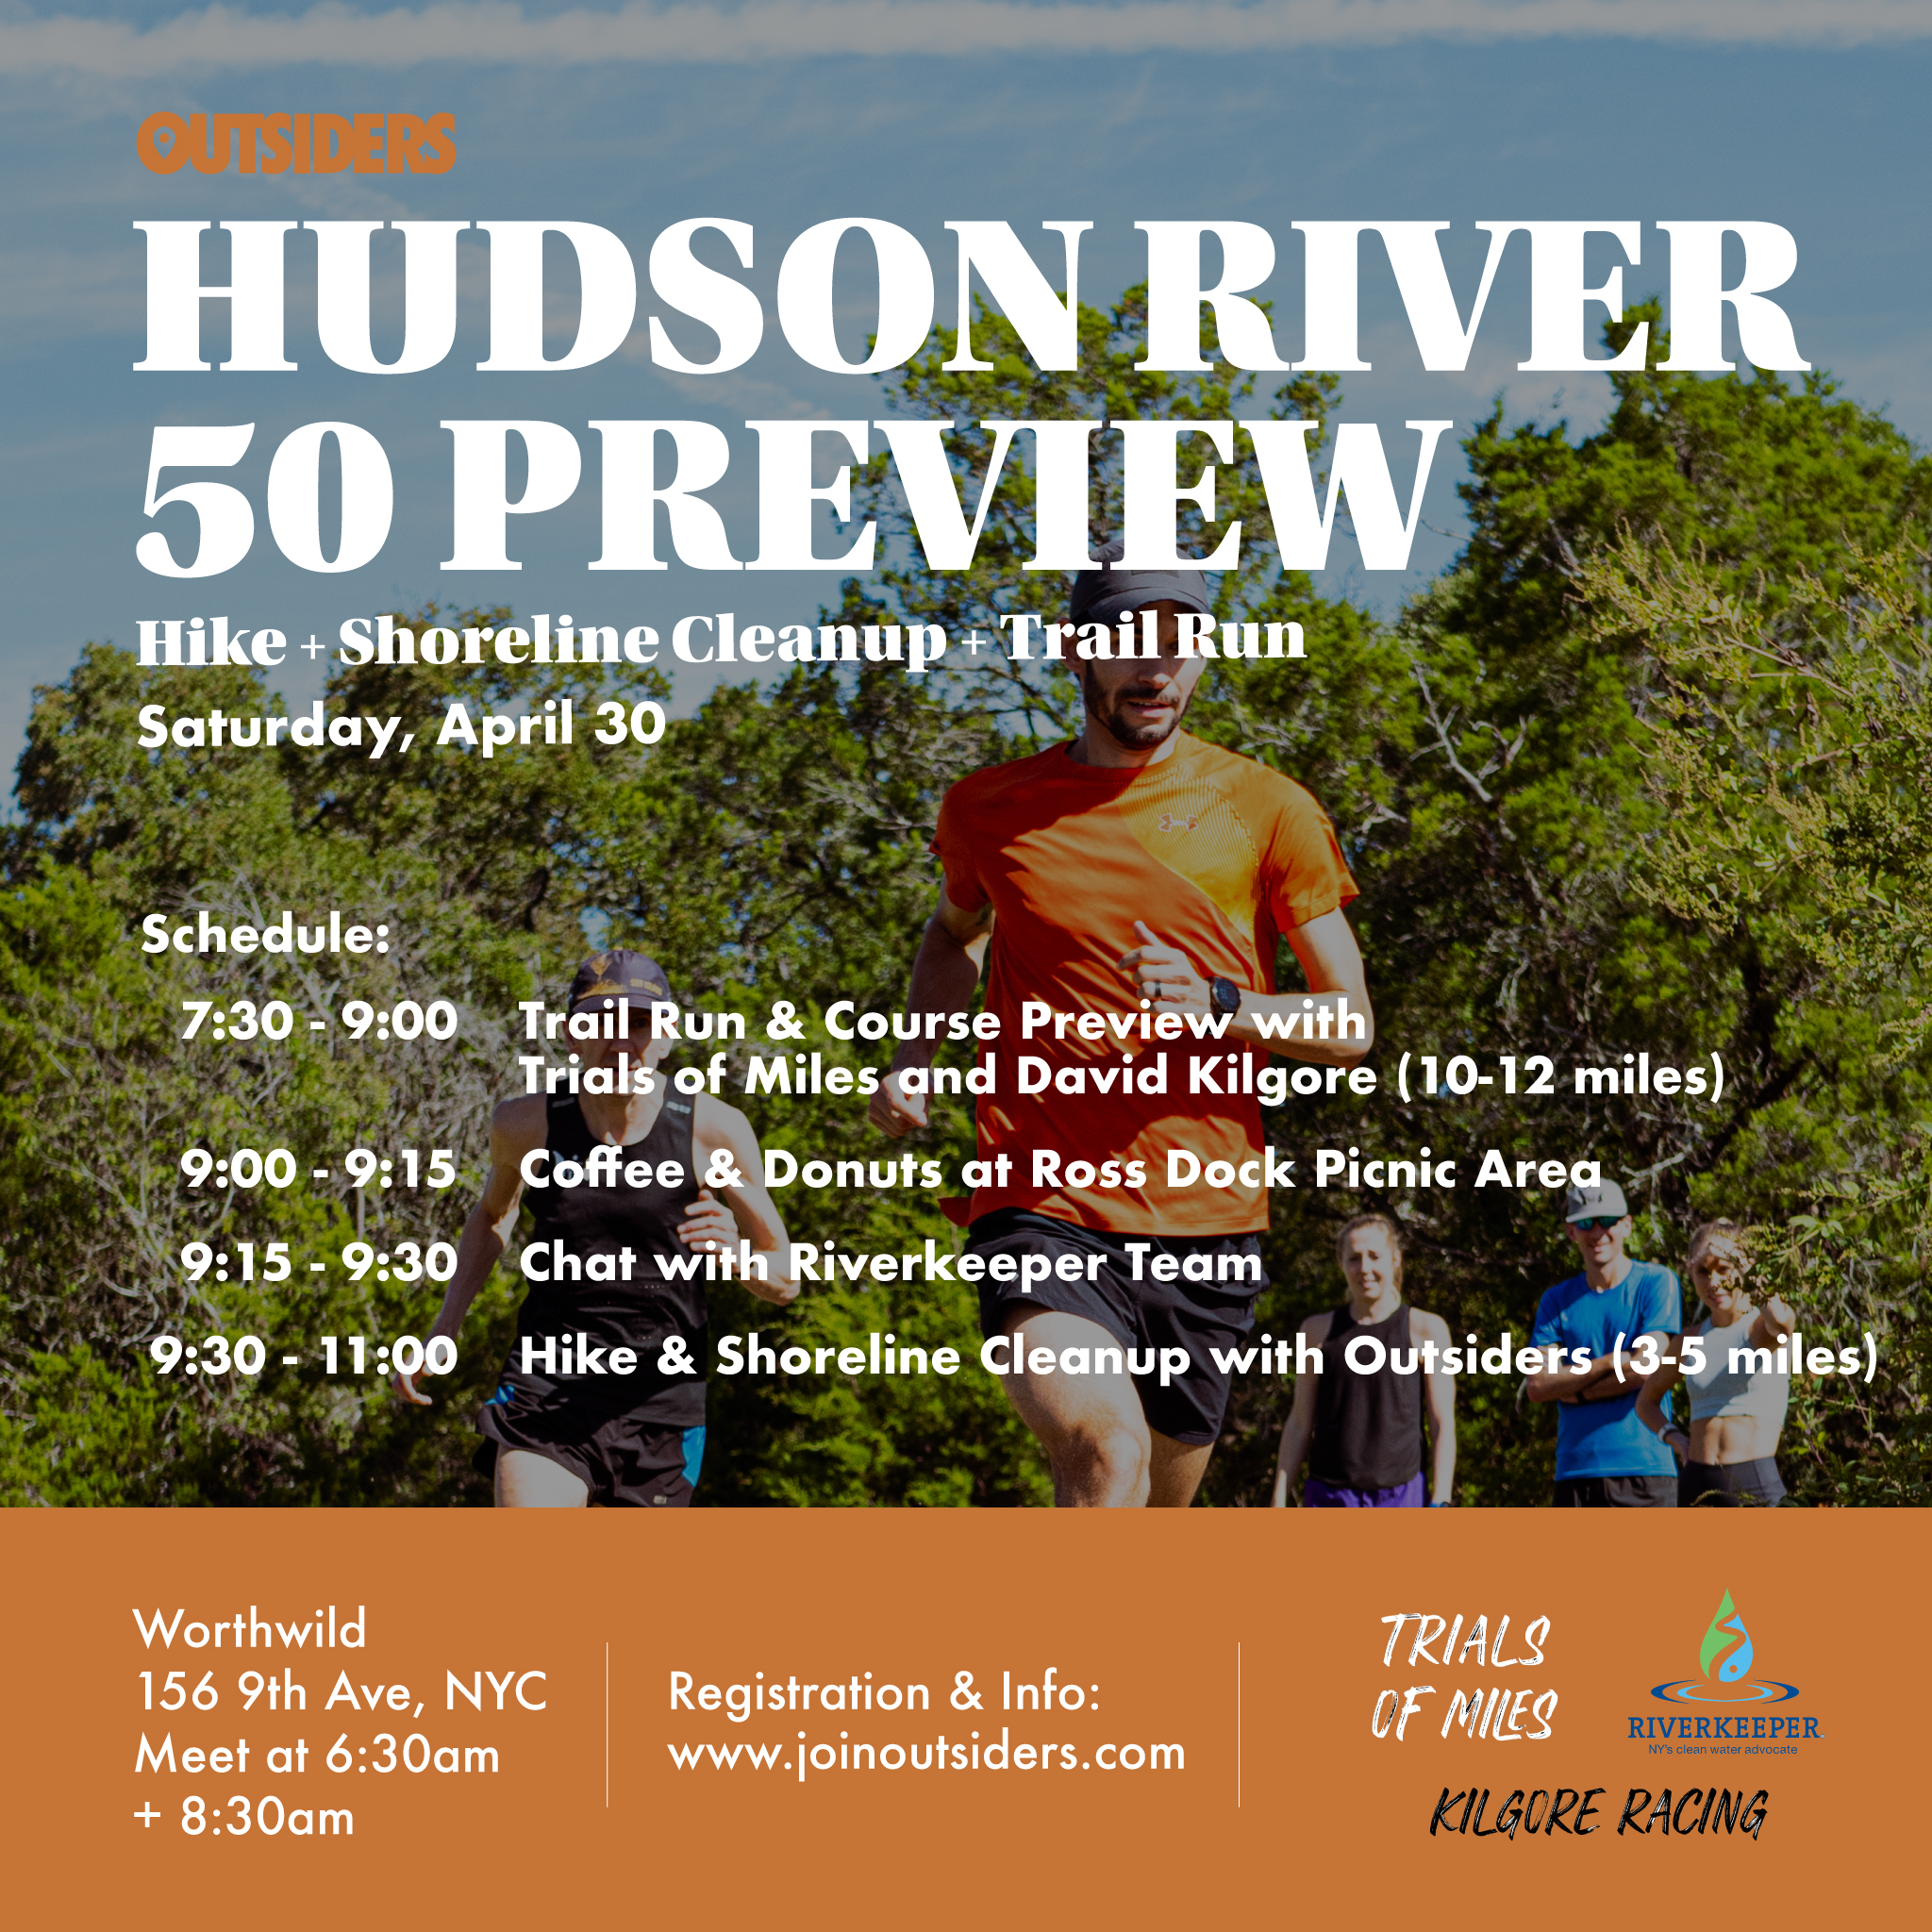 Hudson River 50 Preview